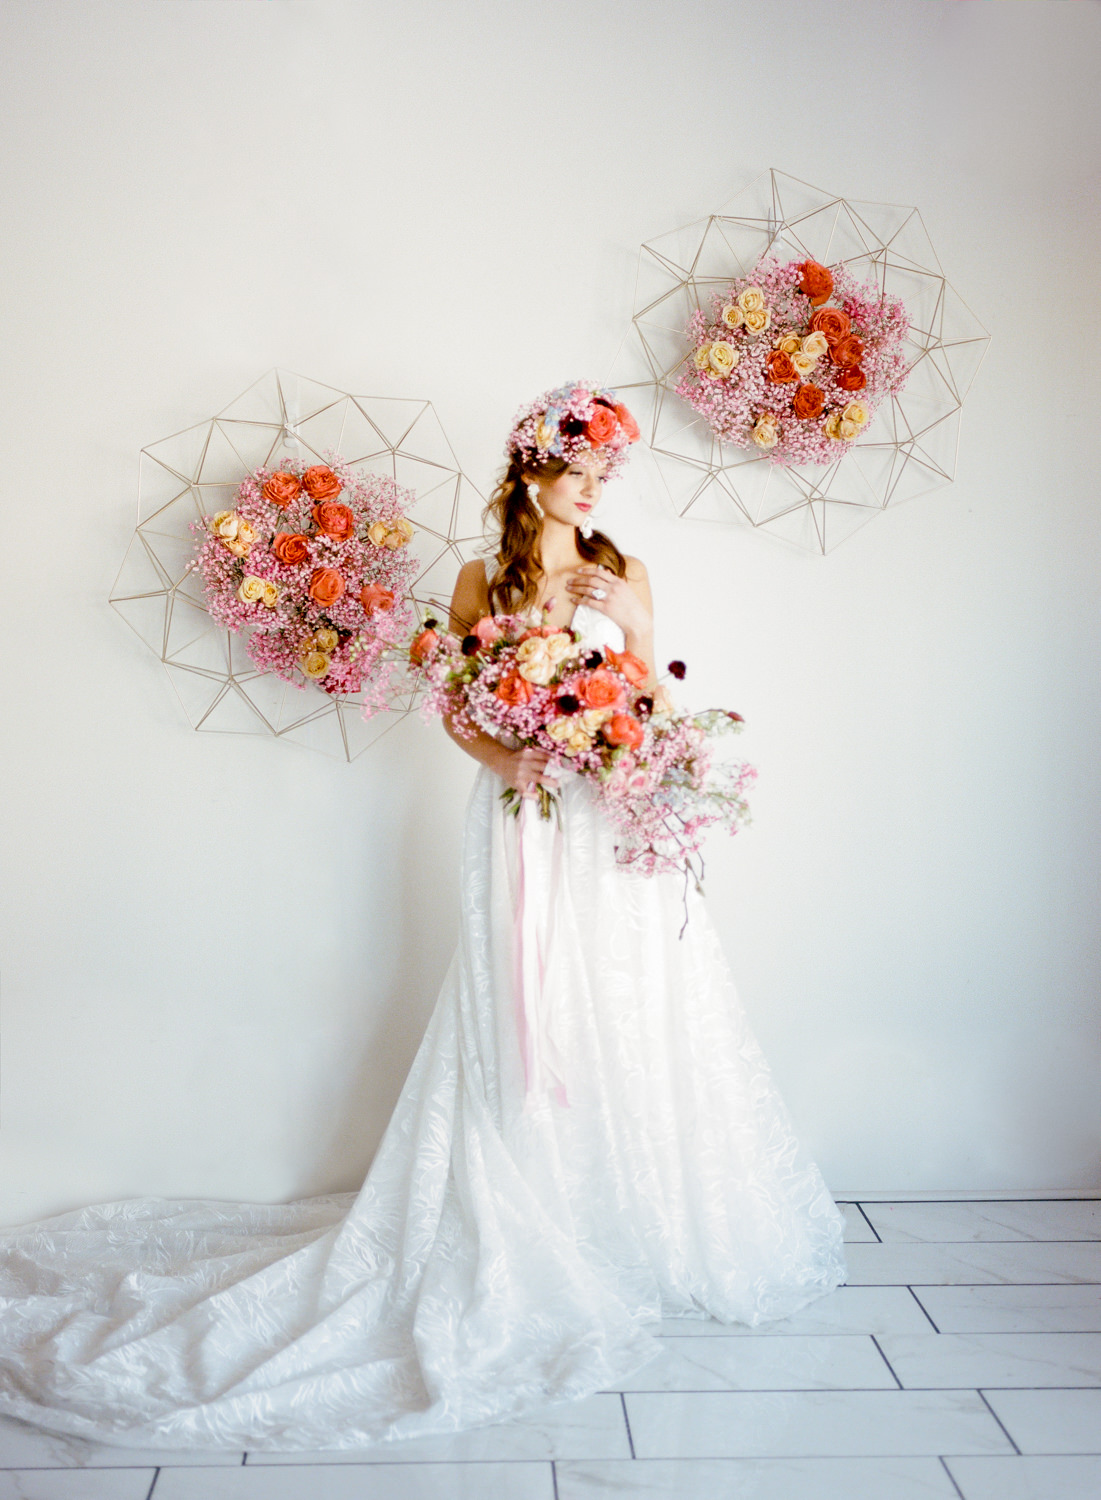 I Do Bridal wedding dress and Lavish Floral Design bouquet, St. Louis fine art film wedding photographer Erica Robnett Photography